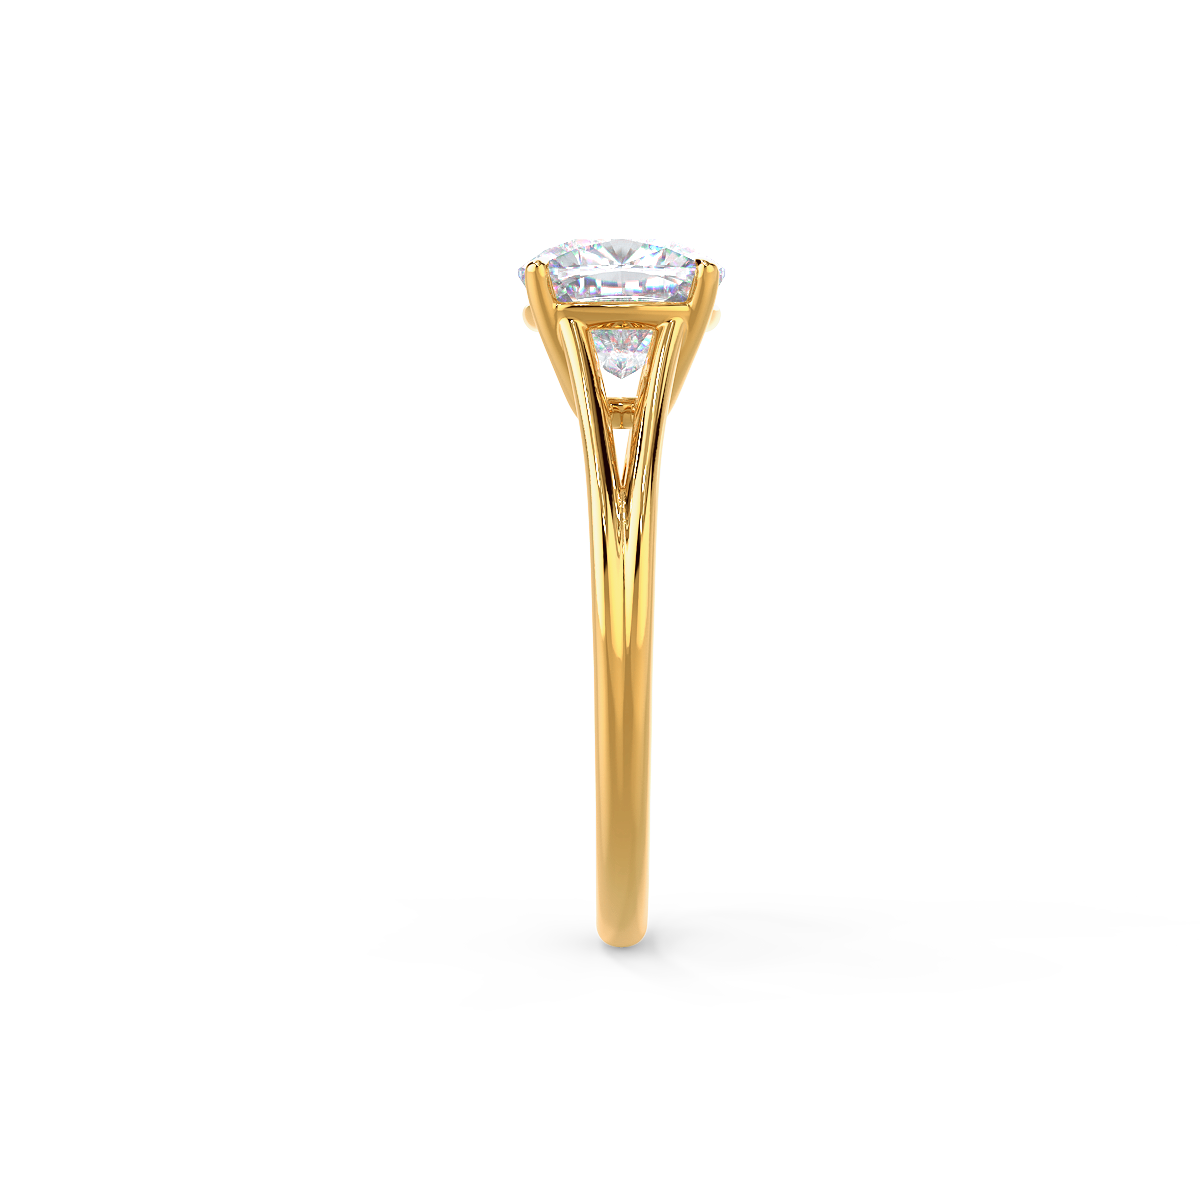 Ada Diamonds Custom Fashion and Bridal Jewelry Featuring Manmade Diamonds